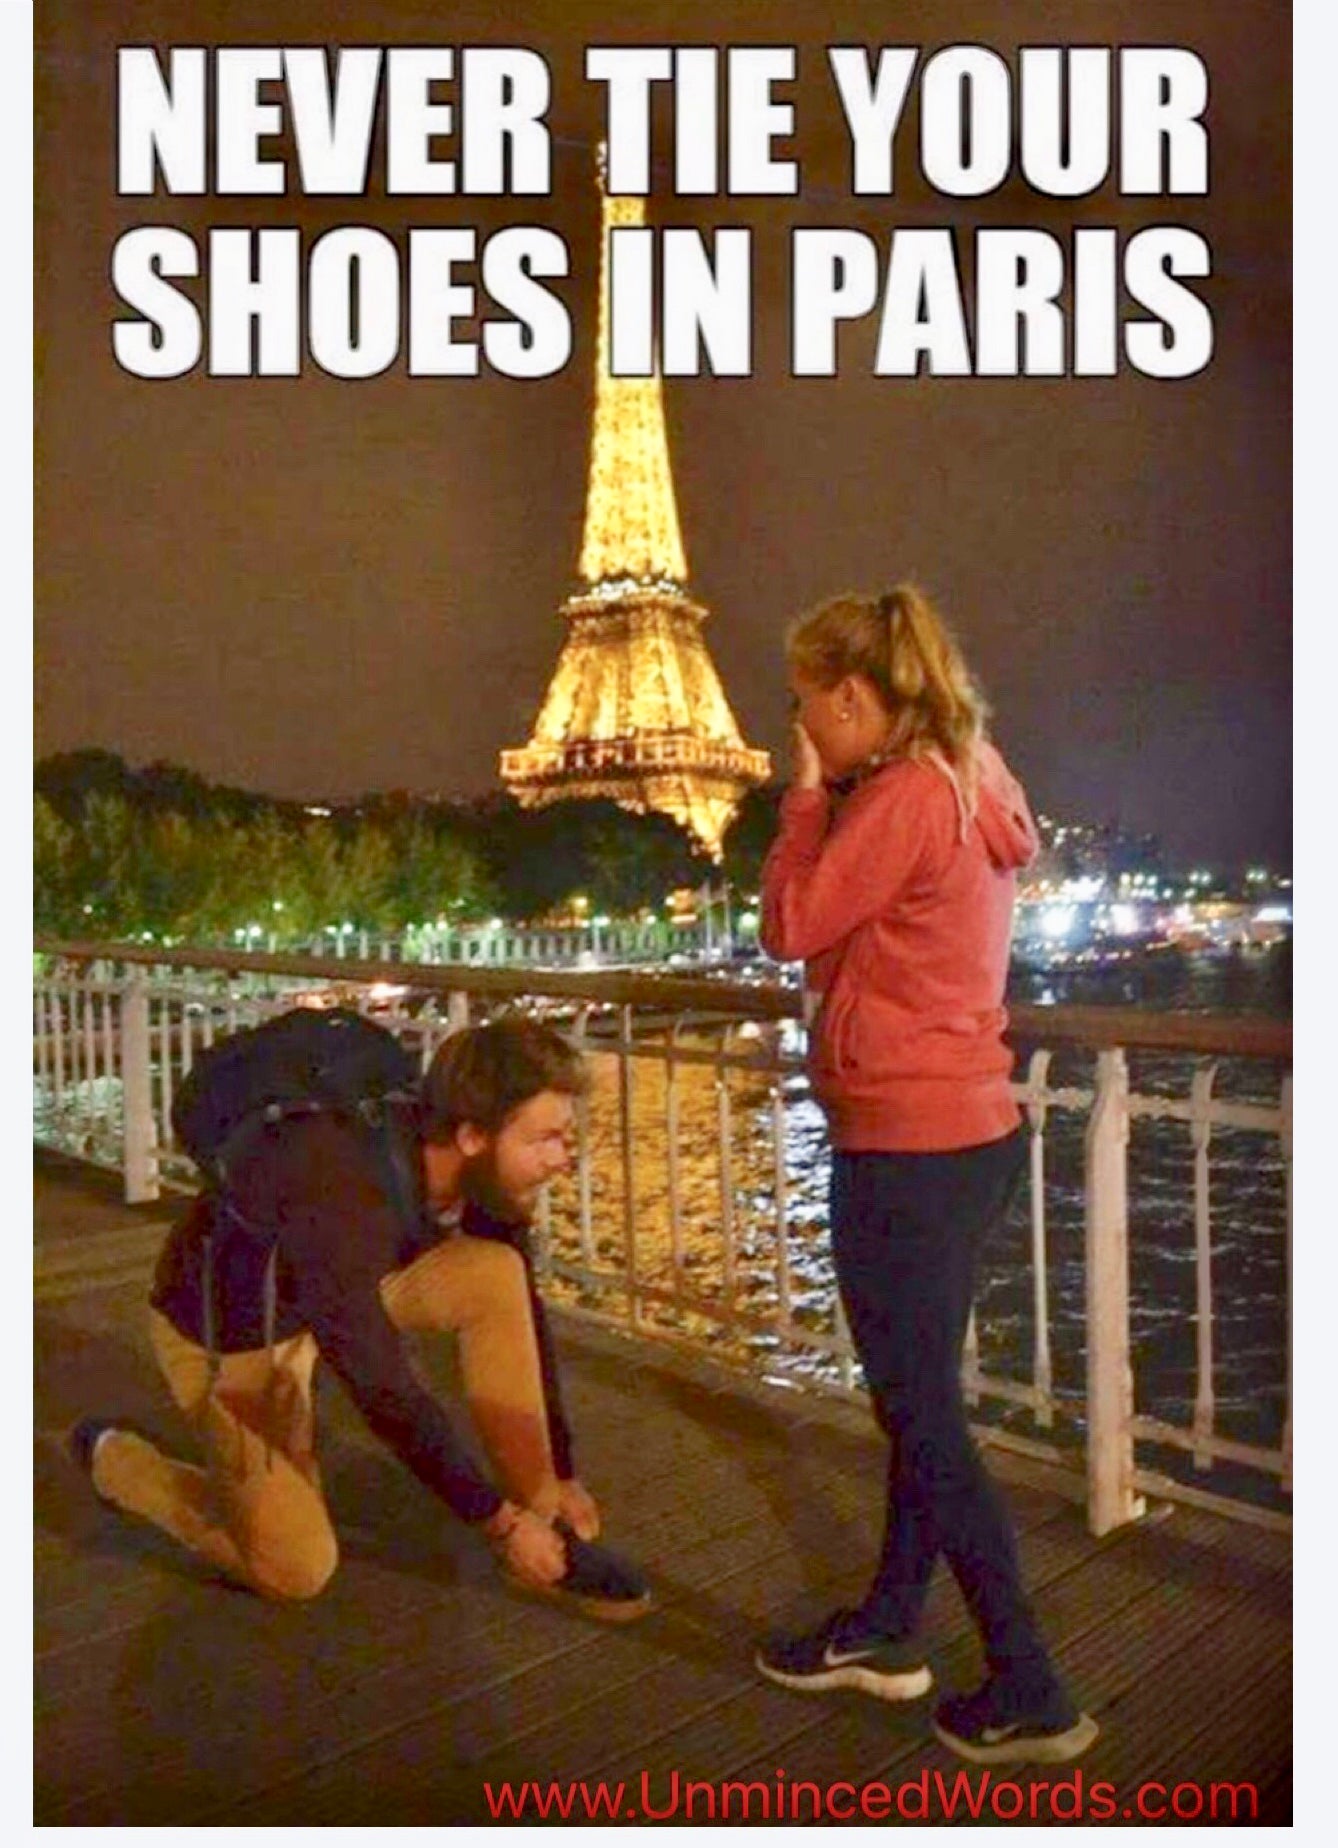 Never tie your shoes in Paris.